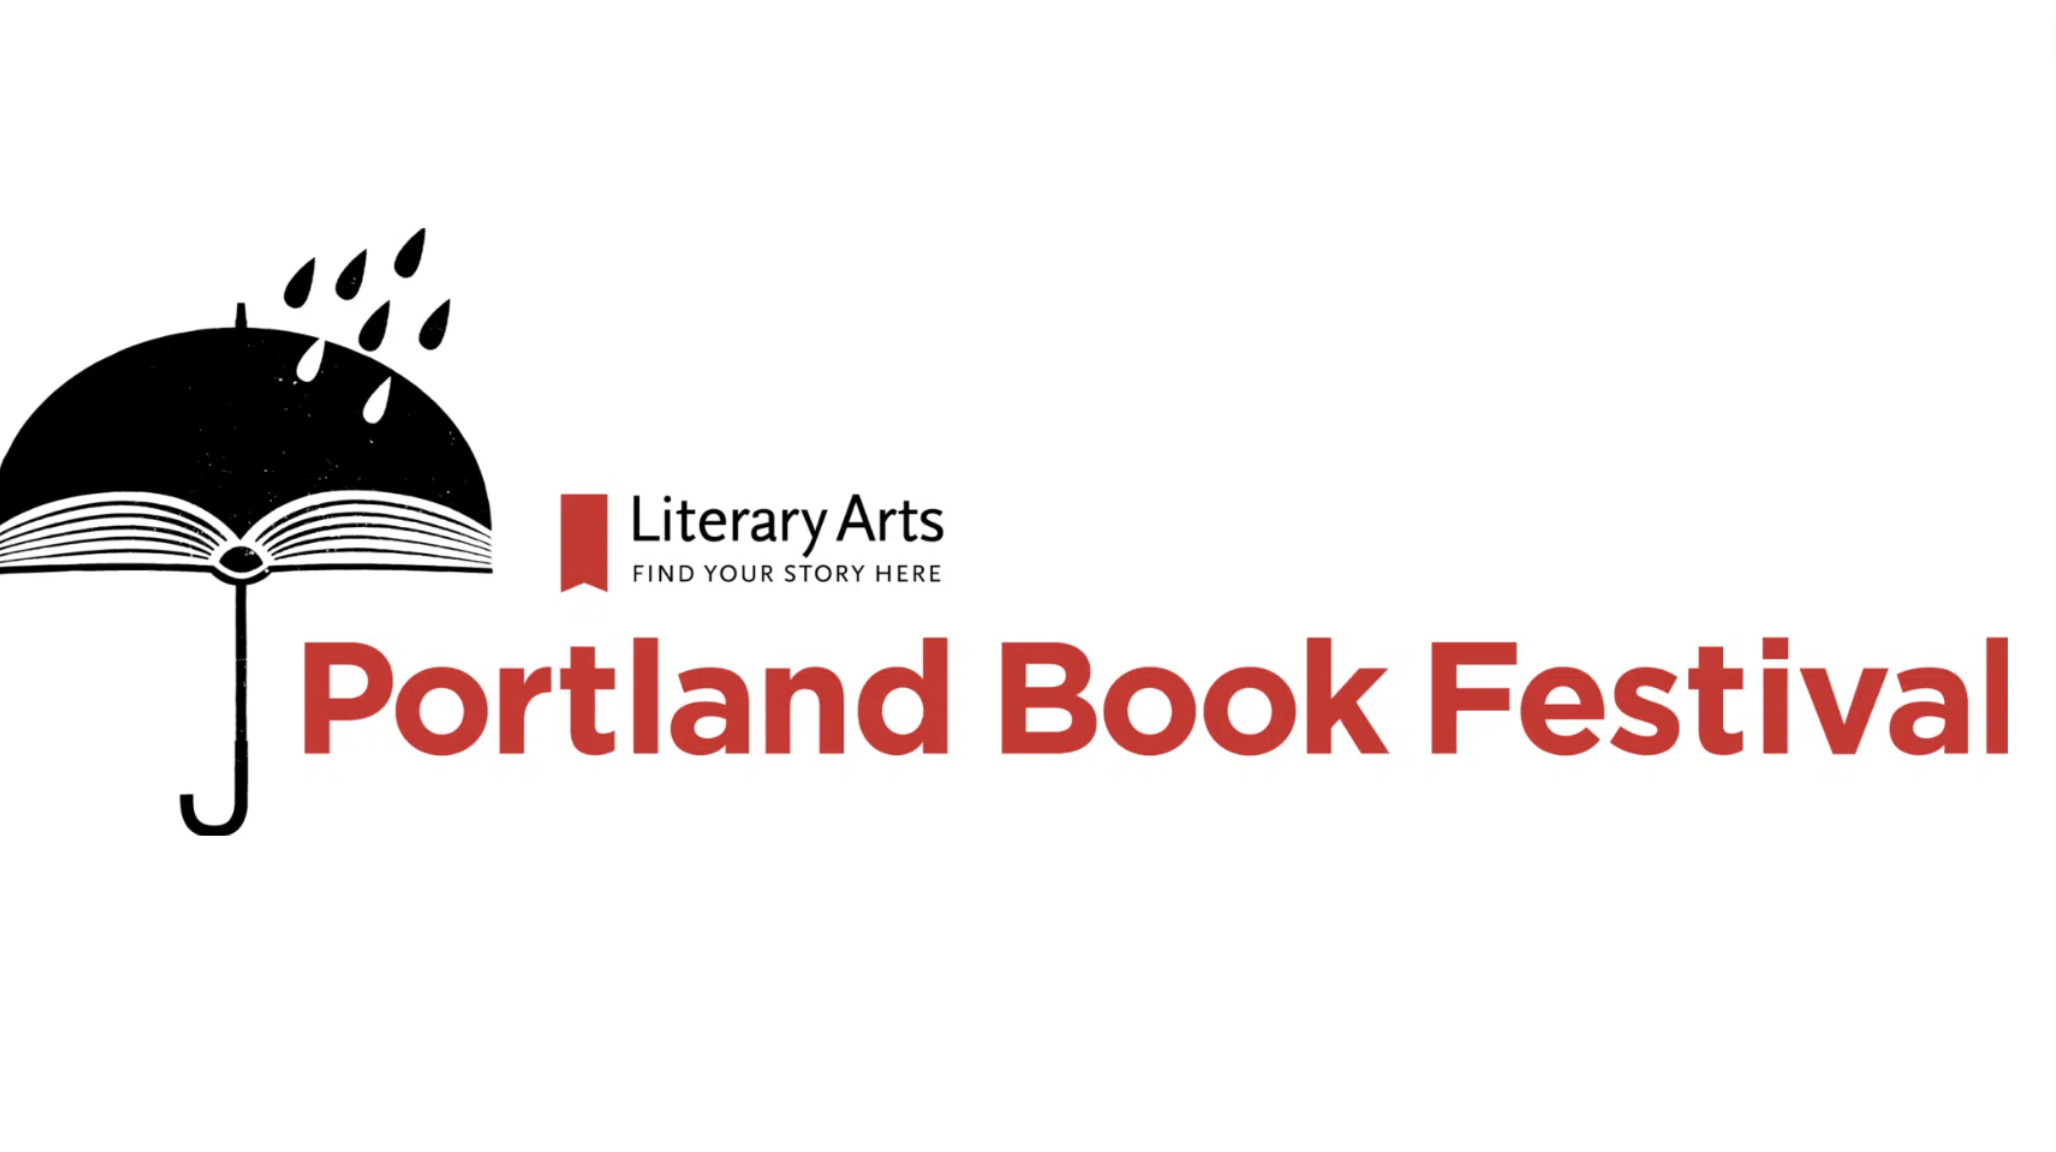 Portland Book Festival